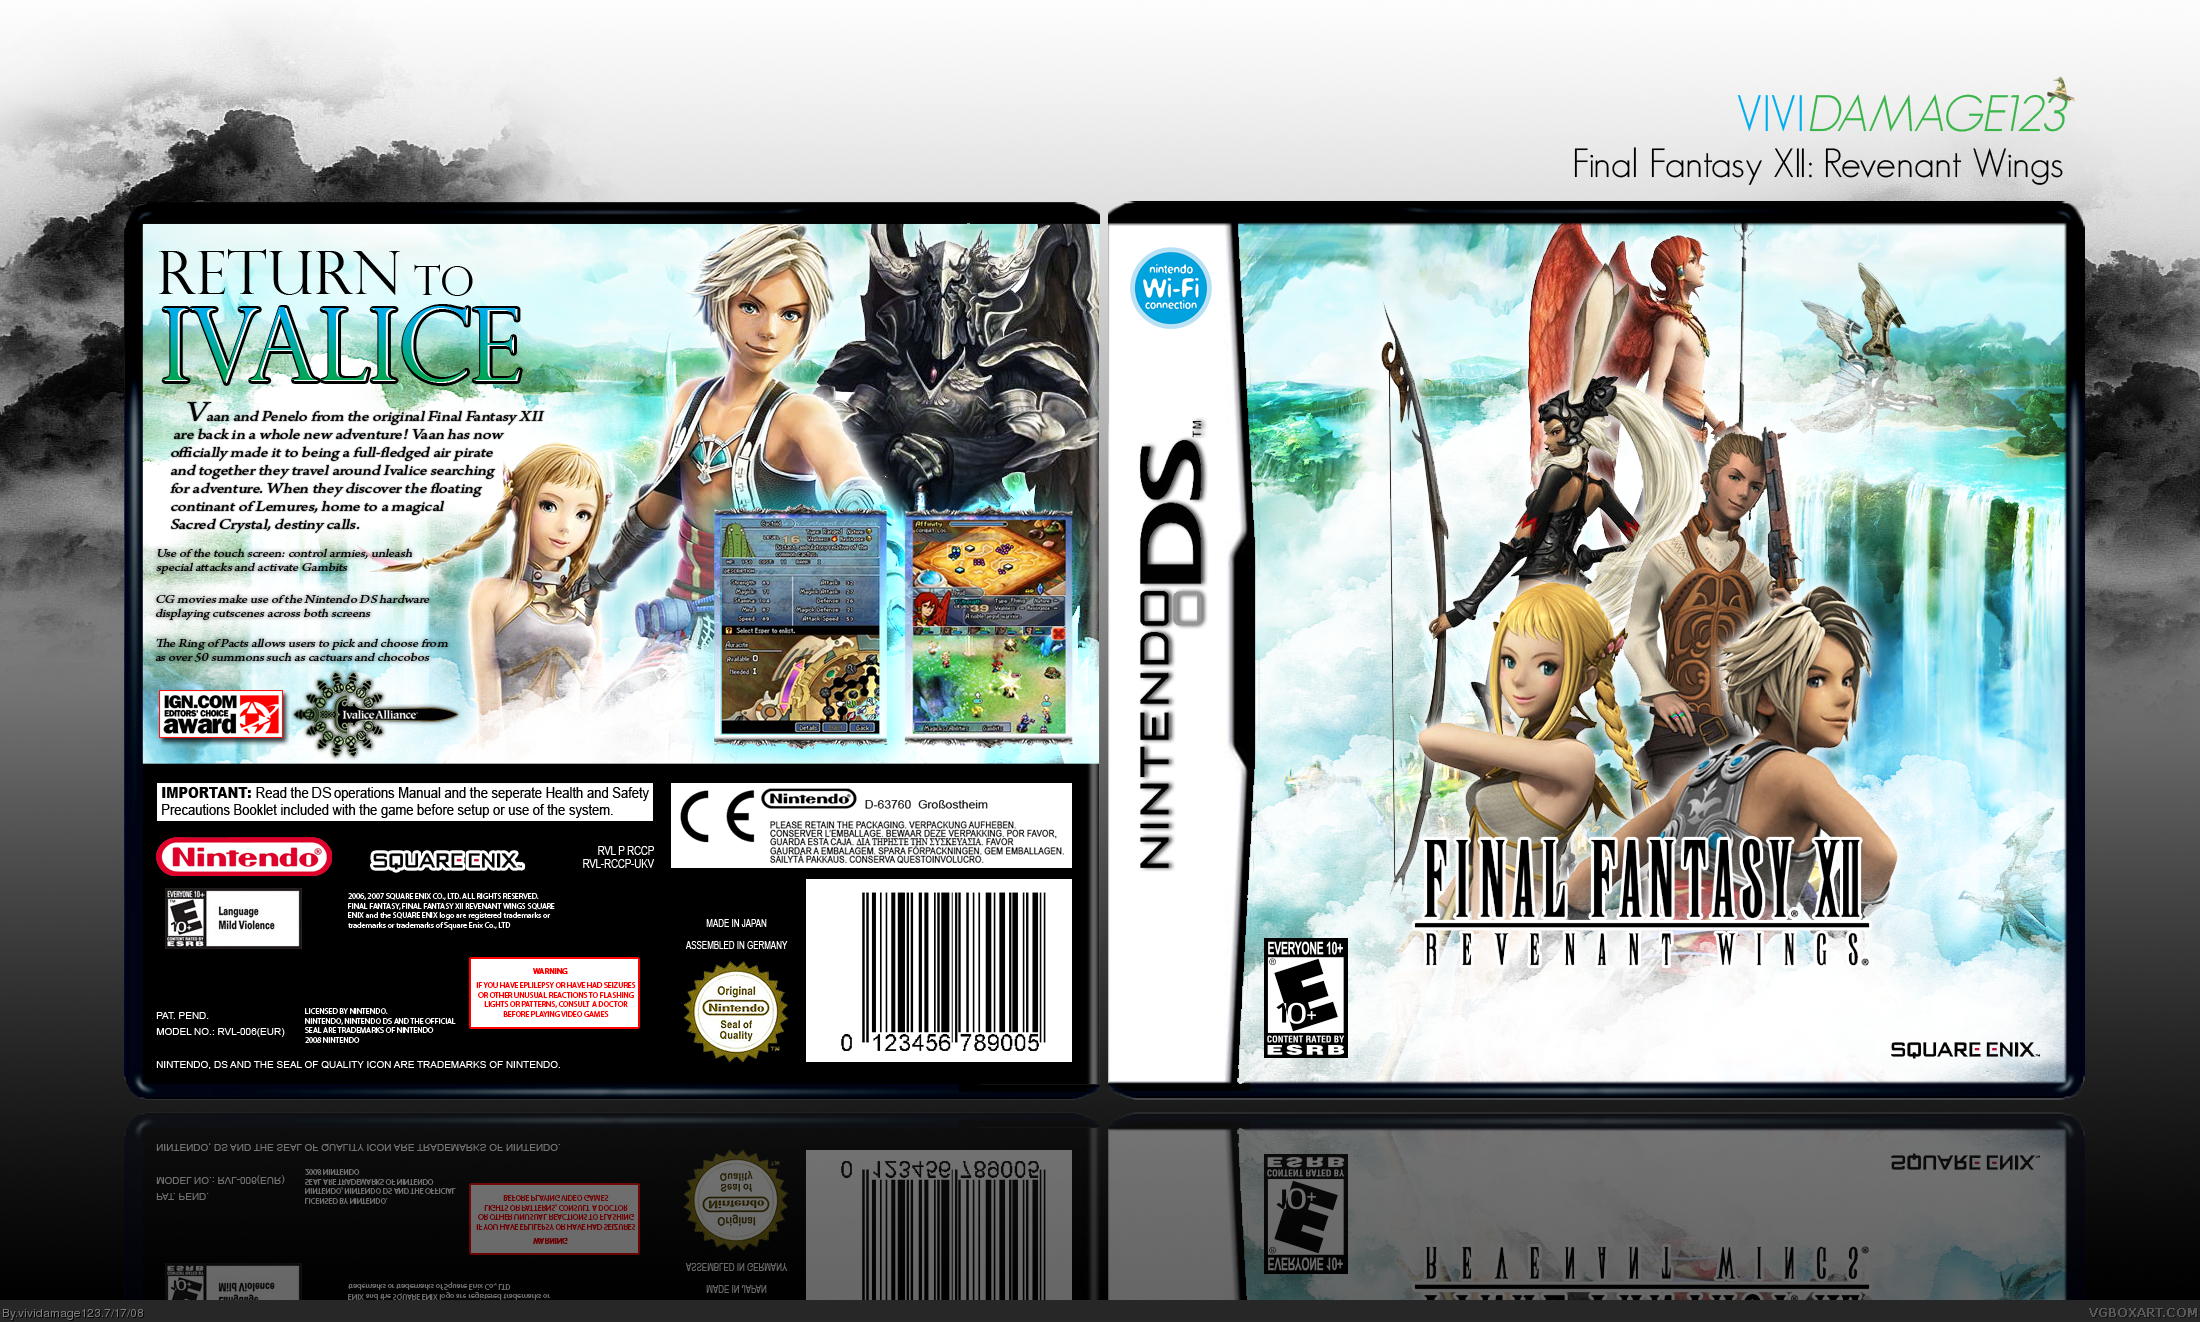 Wings final. Final Fantasy 12 Nintendo DS. Final Fantasy XII: Revenant Wings DS. Финал фэнтези на Нинтендо ДС. Final Fantasy XII: Revenant Wings - Nintendo DS.